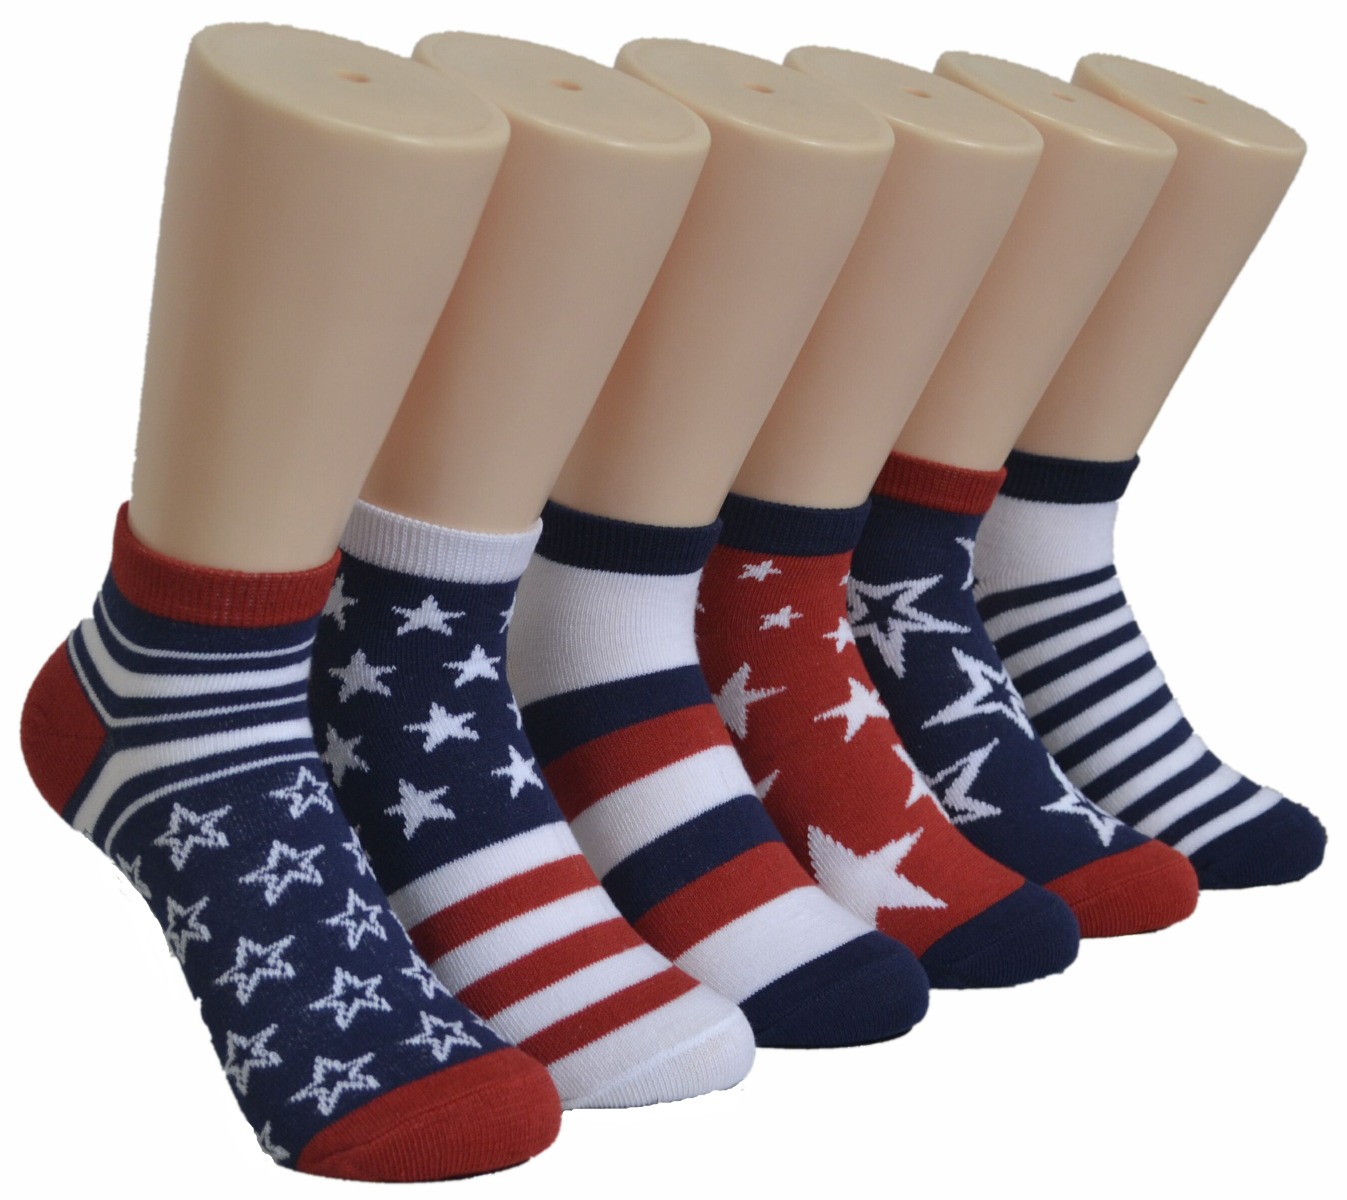 Women's Low Cut Printed Socks - USA American FLAG Prints - Size 9-11